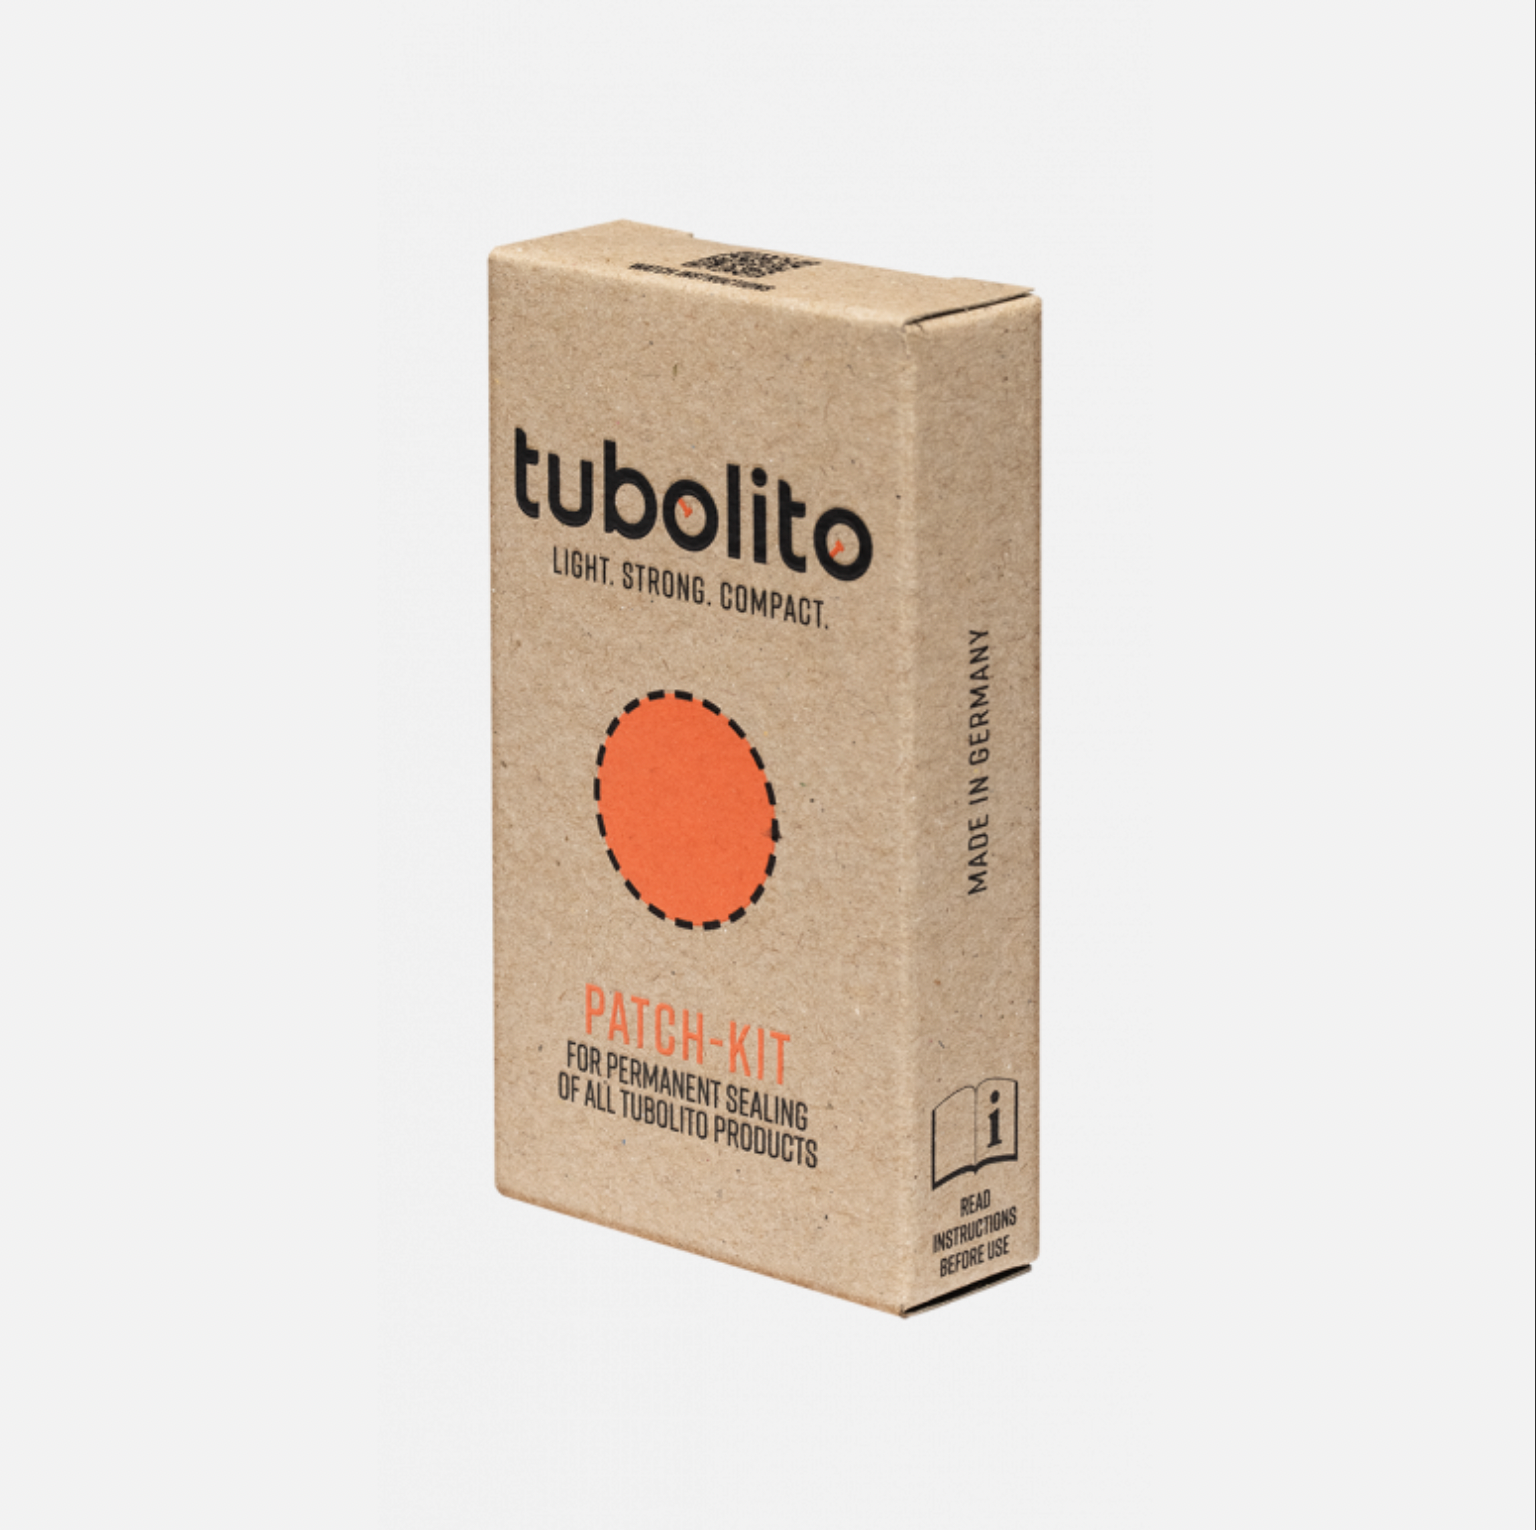 Tubolito Patch-Kit Repair Kit